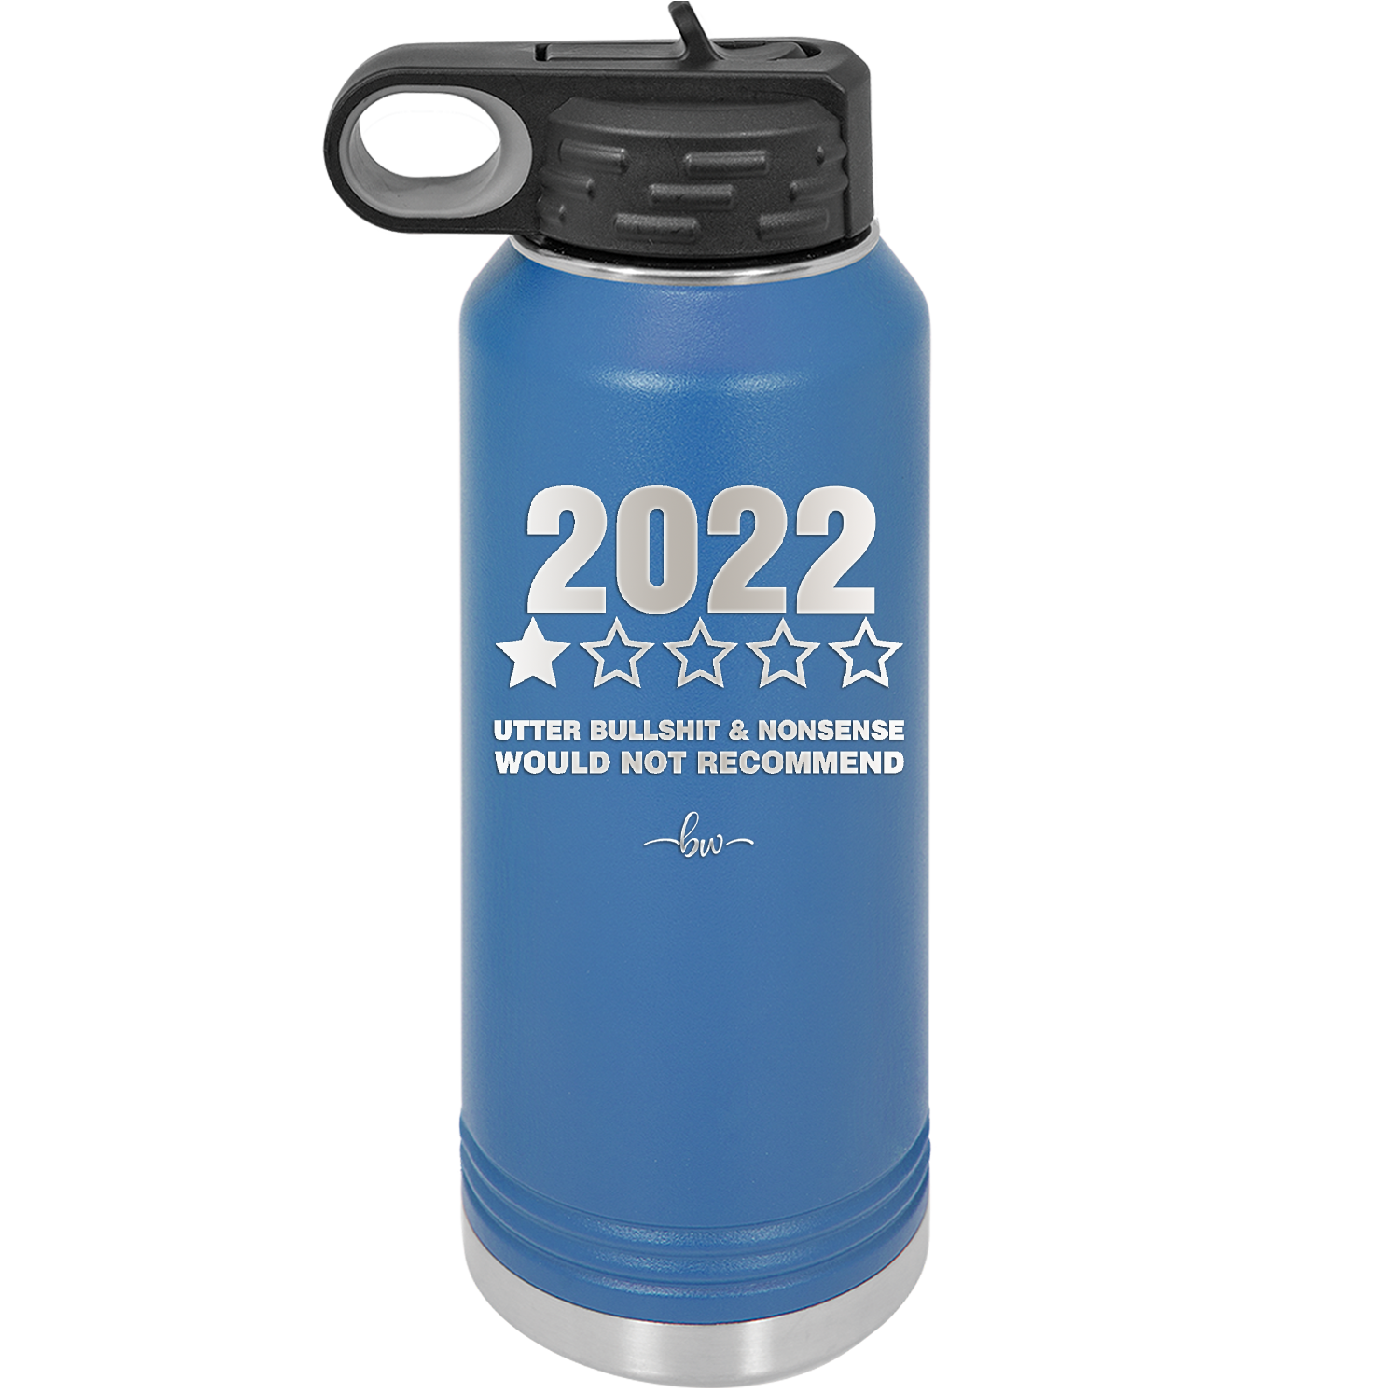 32 oz water bottle  2022 utter bullshitt and nonsense would not recommend--Royal